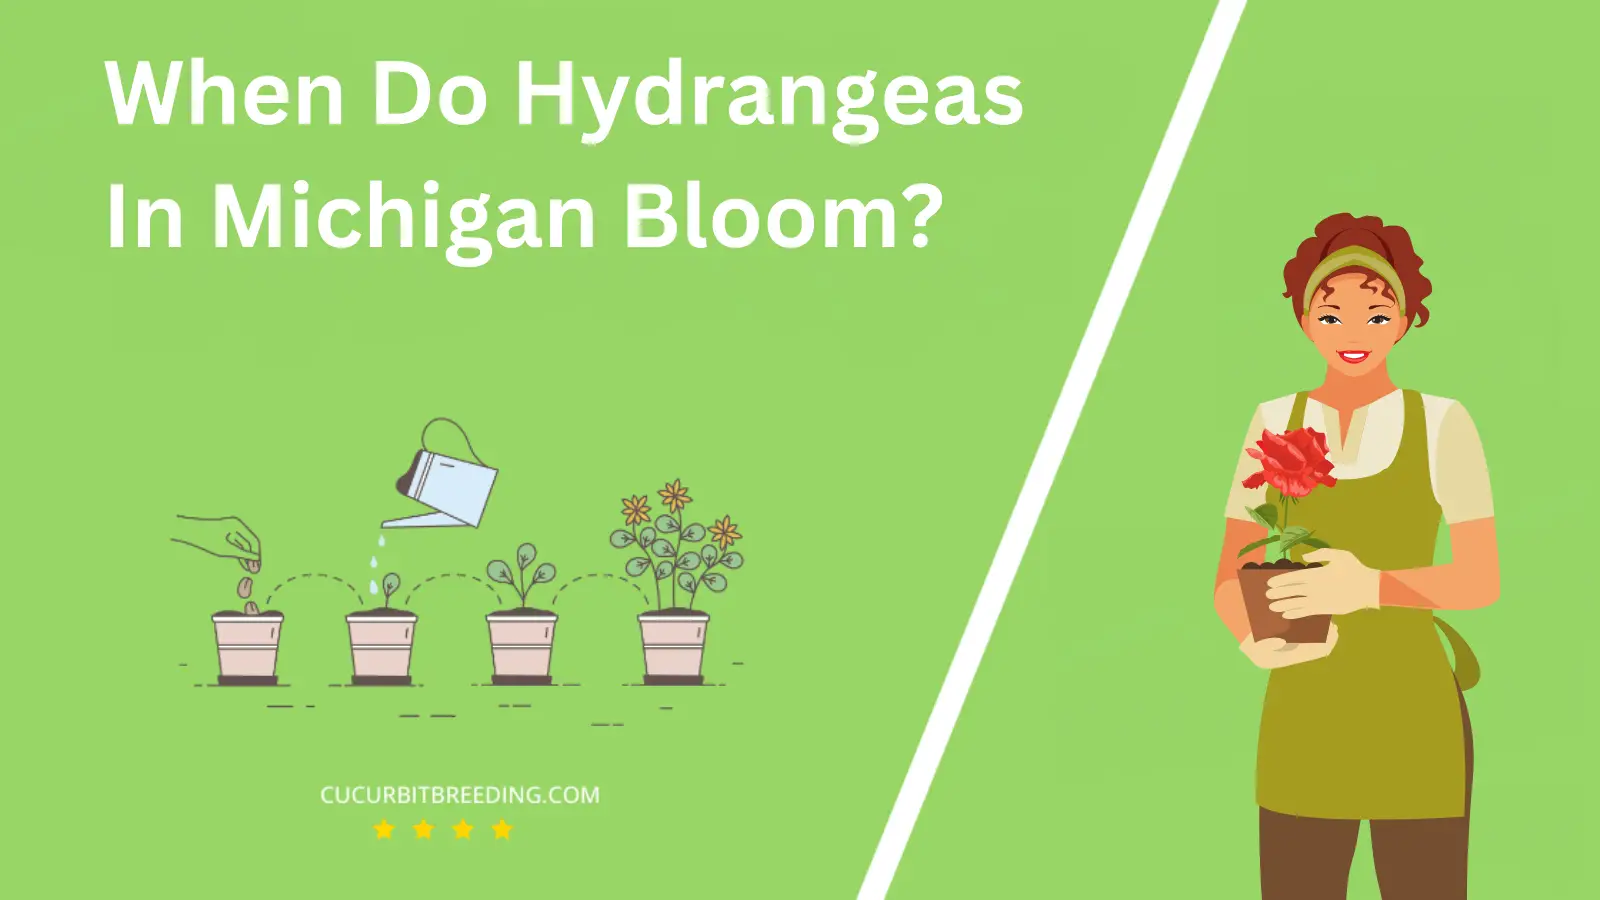 When Do Hydrangeas In Michigan Bloom?